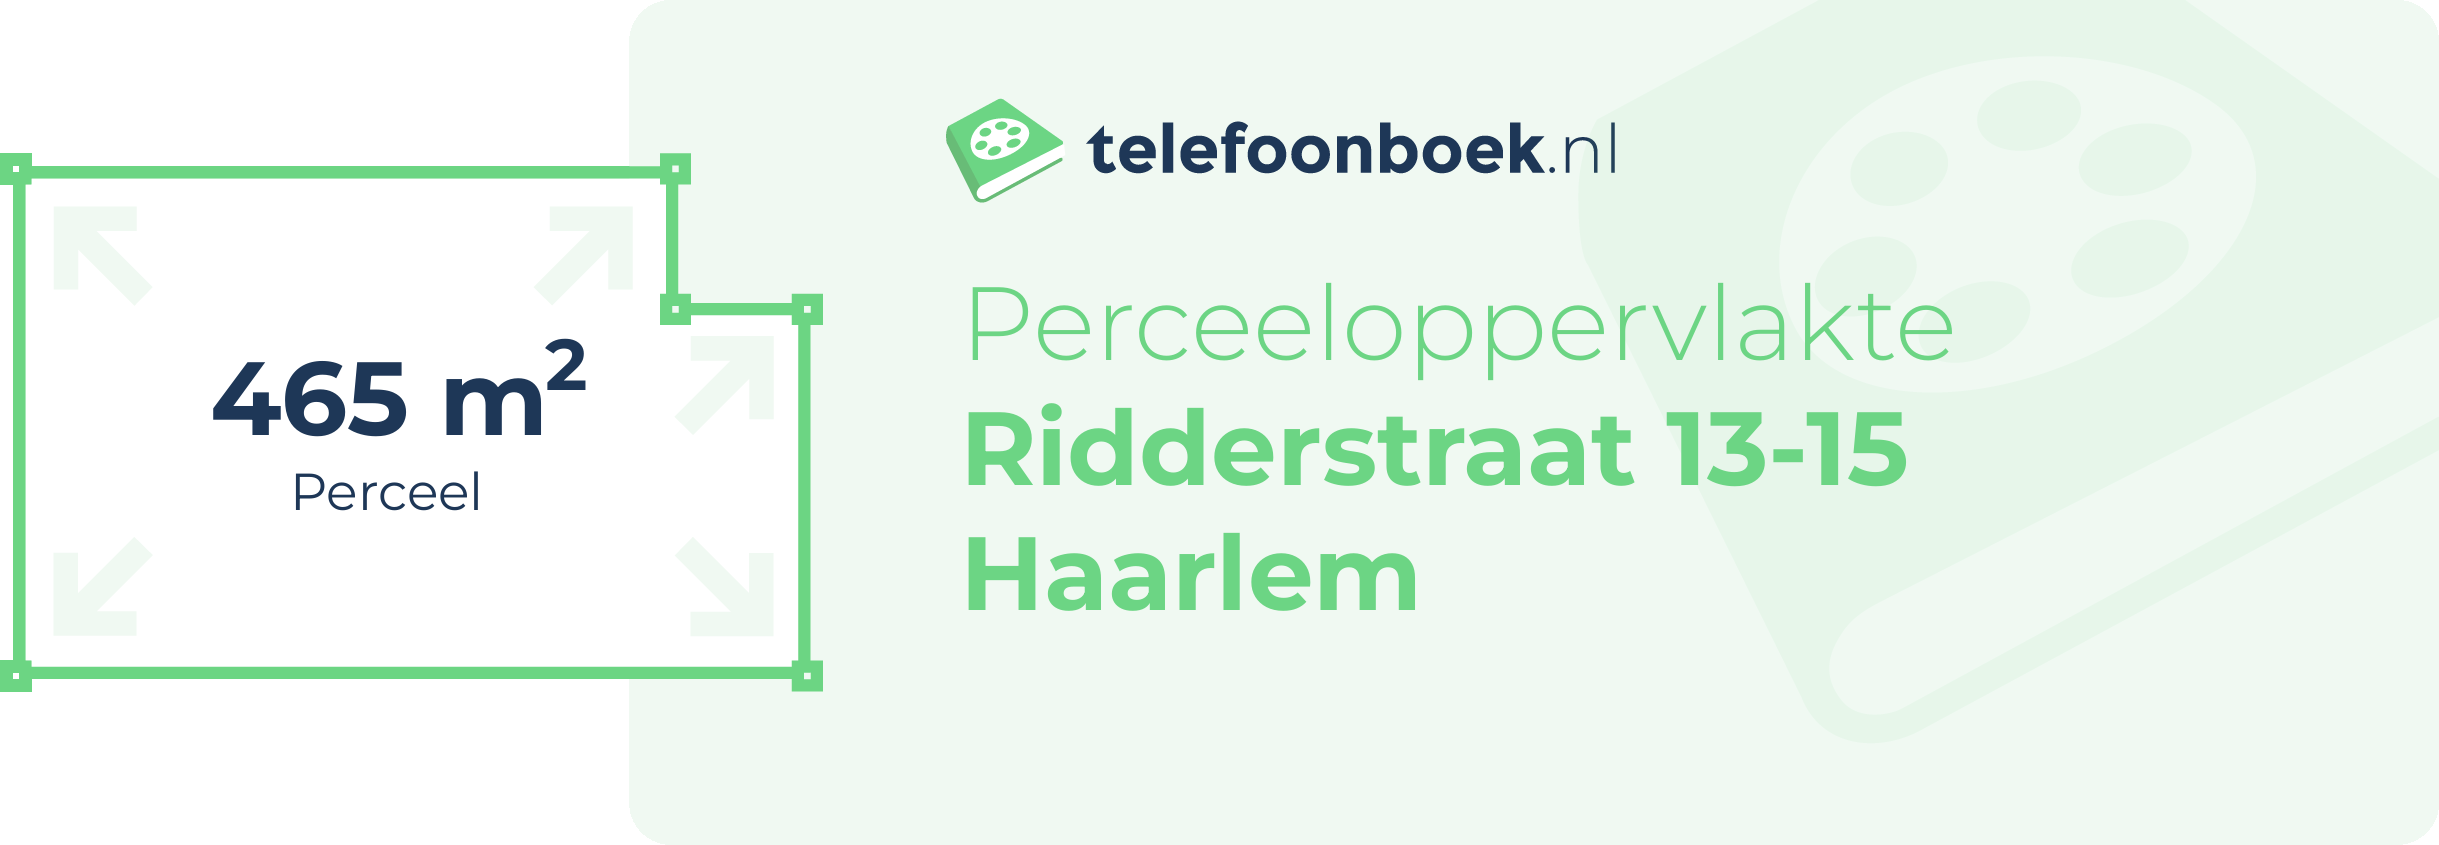 Perceeloppervlakte Ridderstraat 13-15 Haarlem